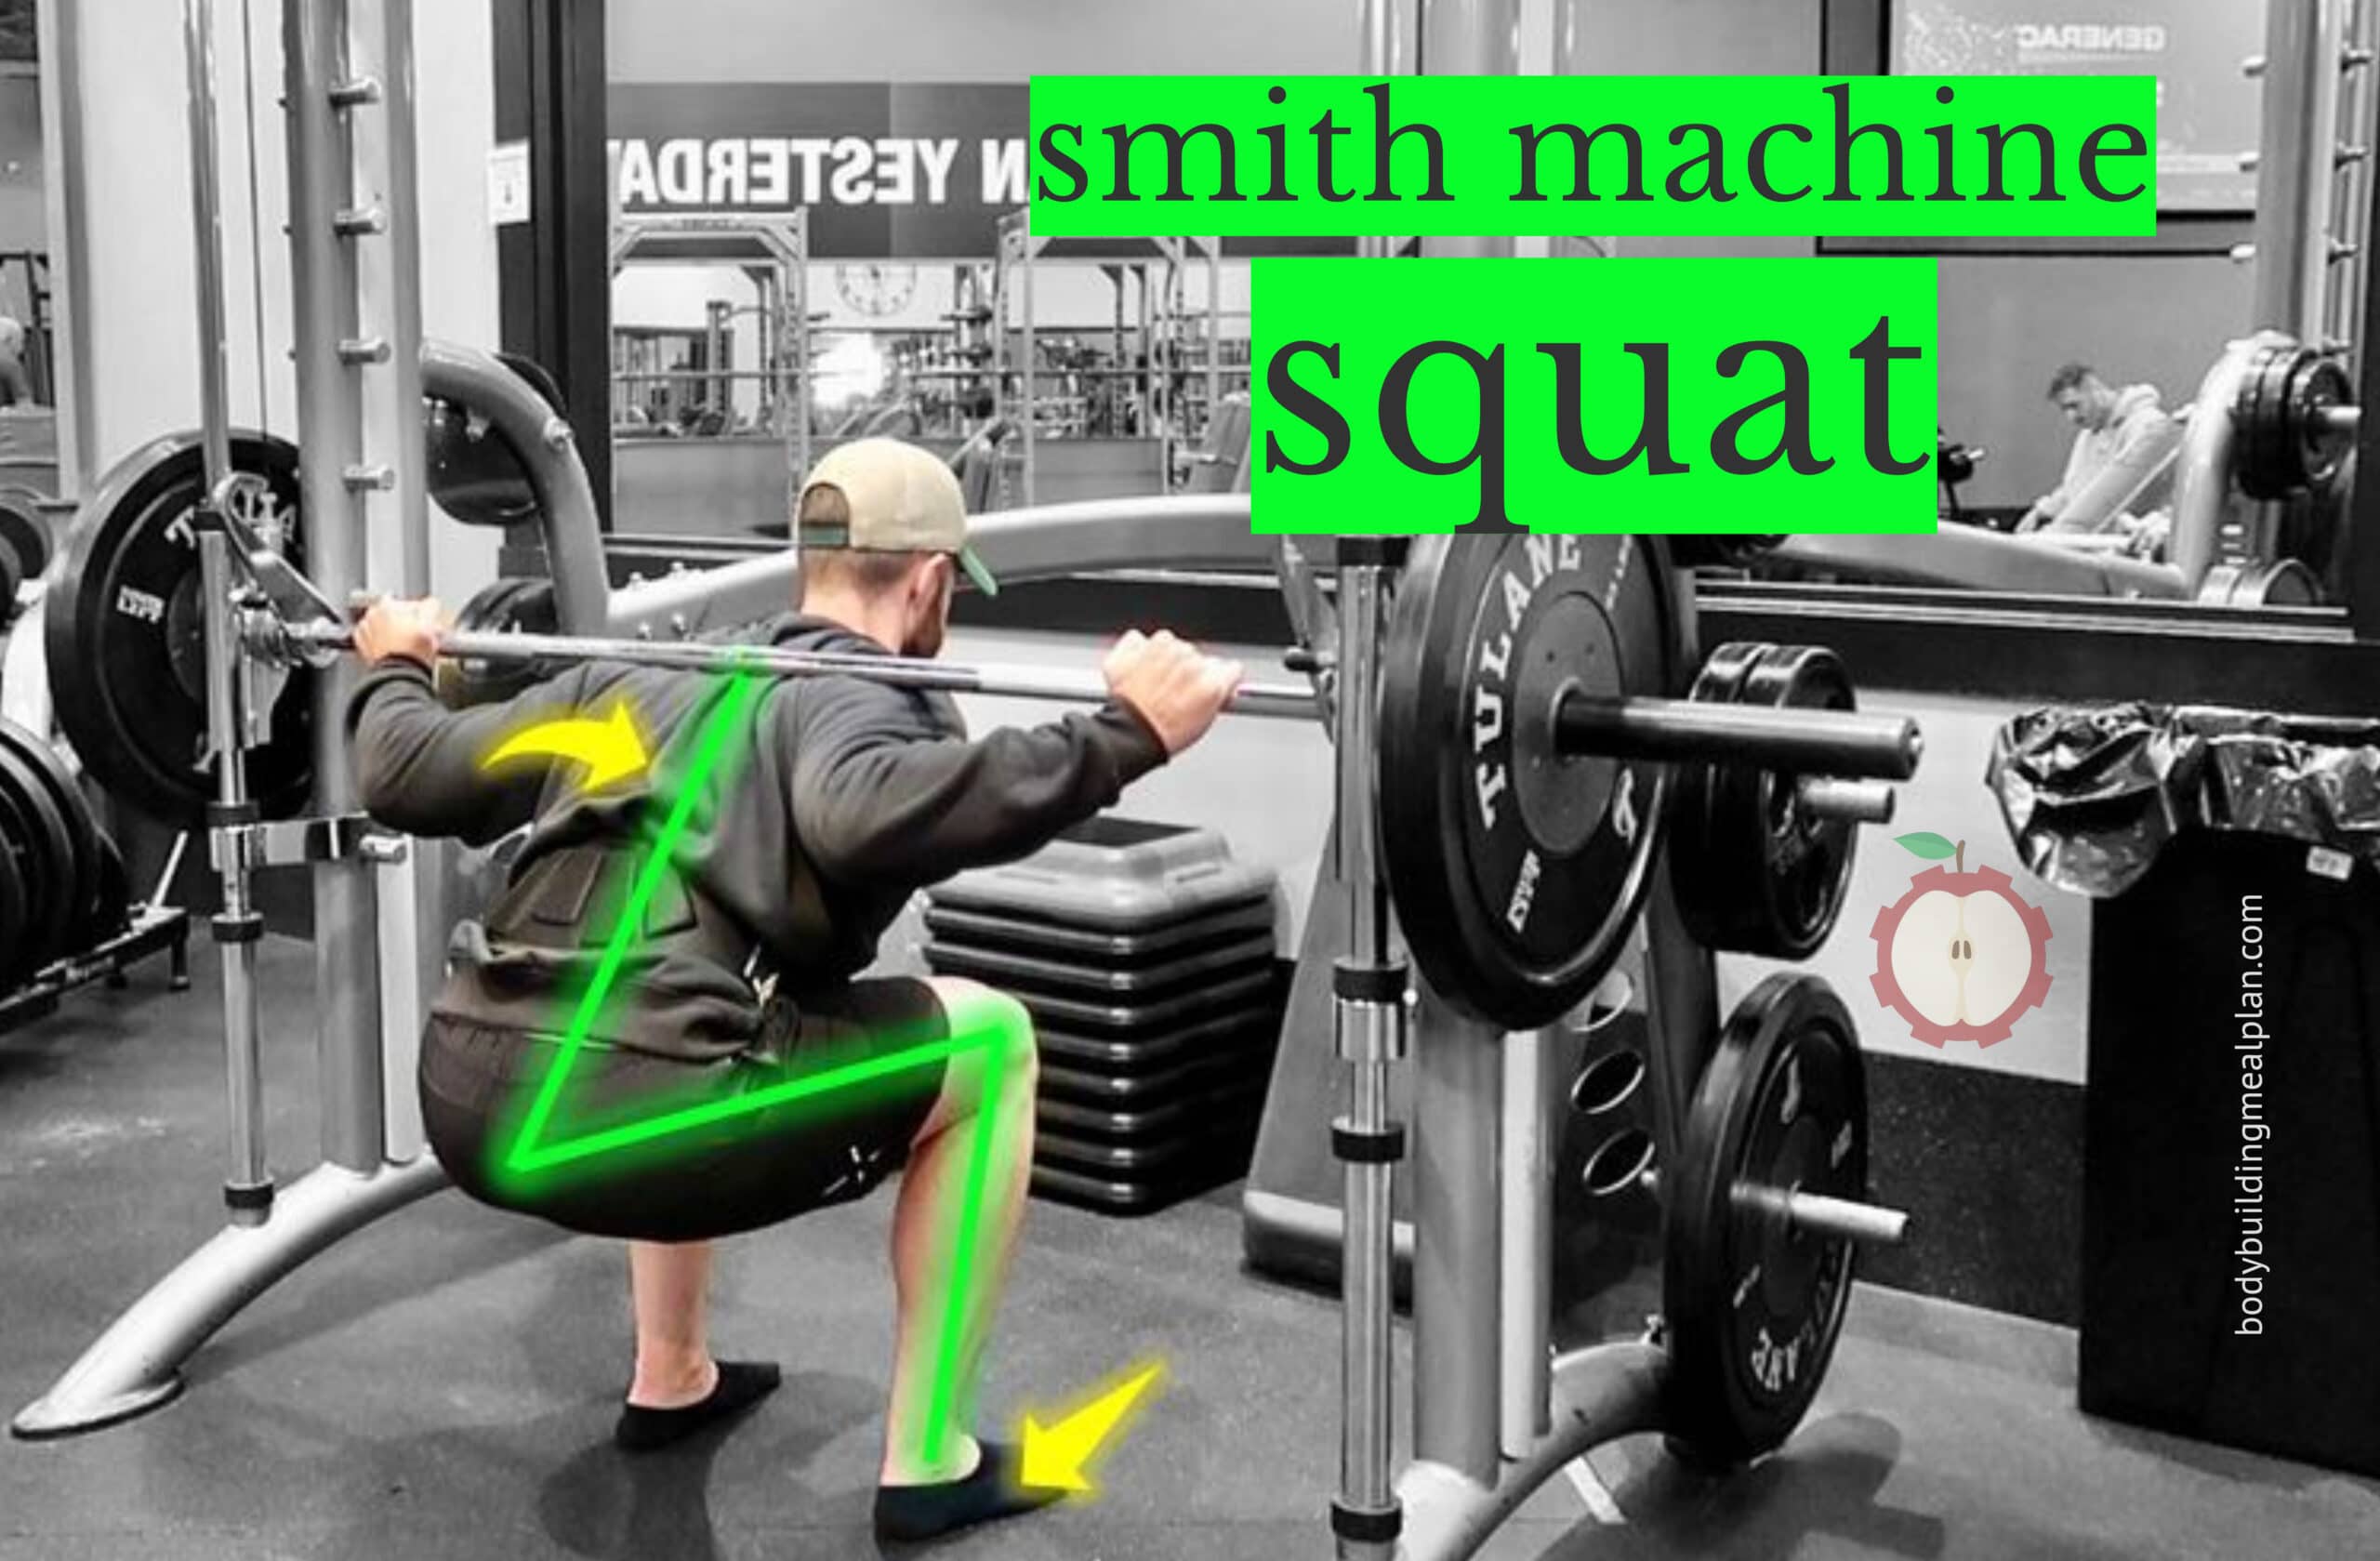 Smith Machine Squat